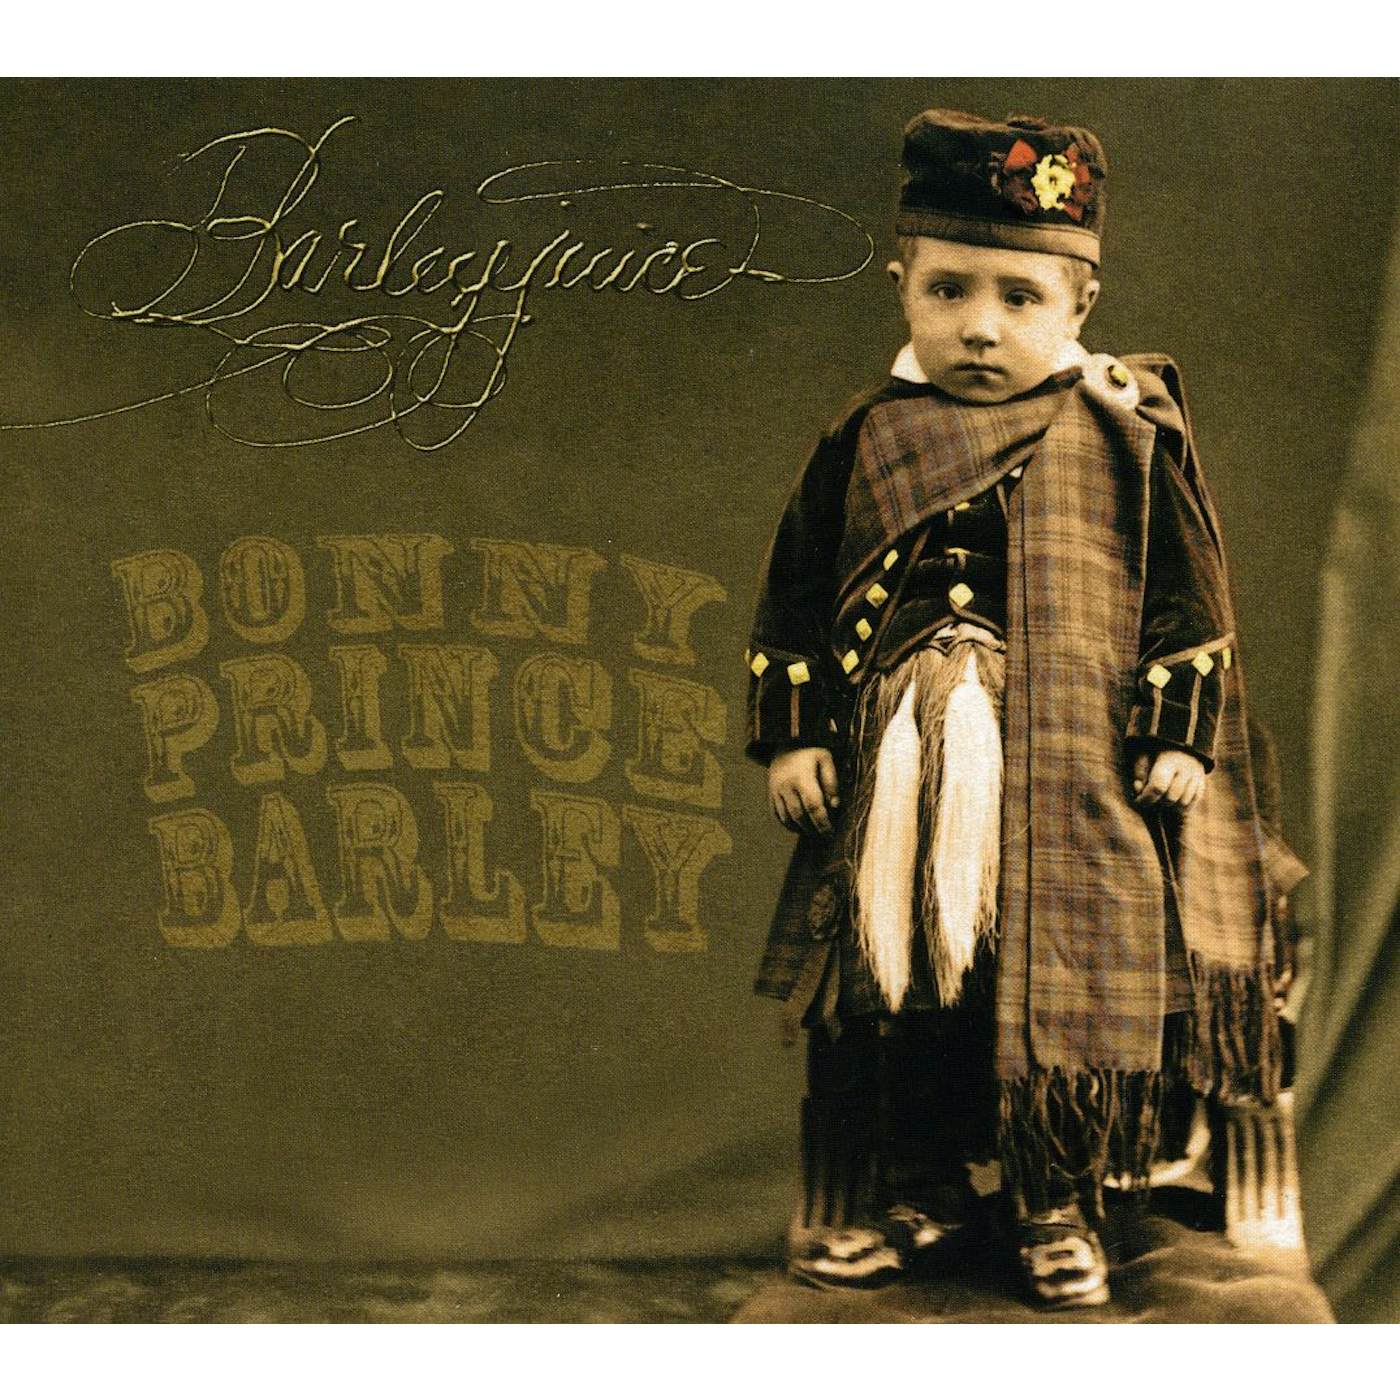 Barleyjuice BONNY PRINCE BARLEY CD